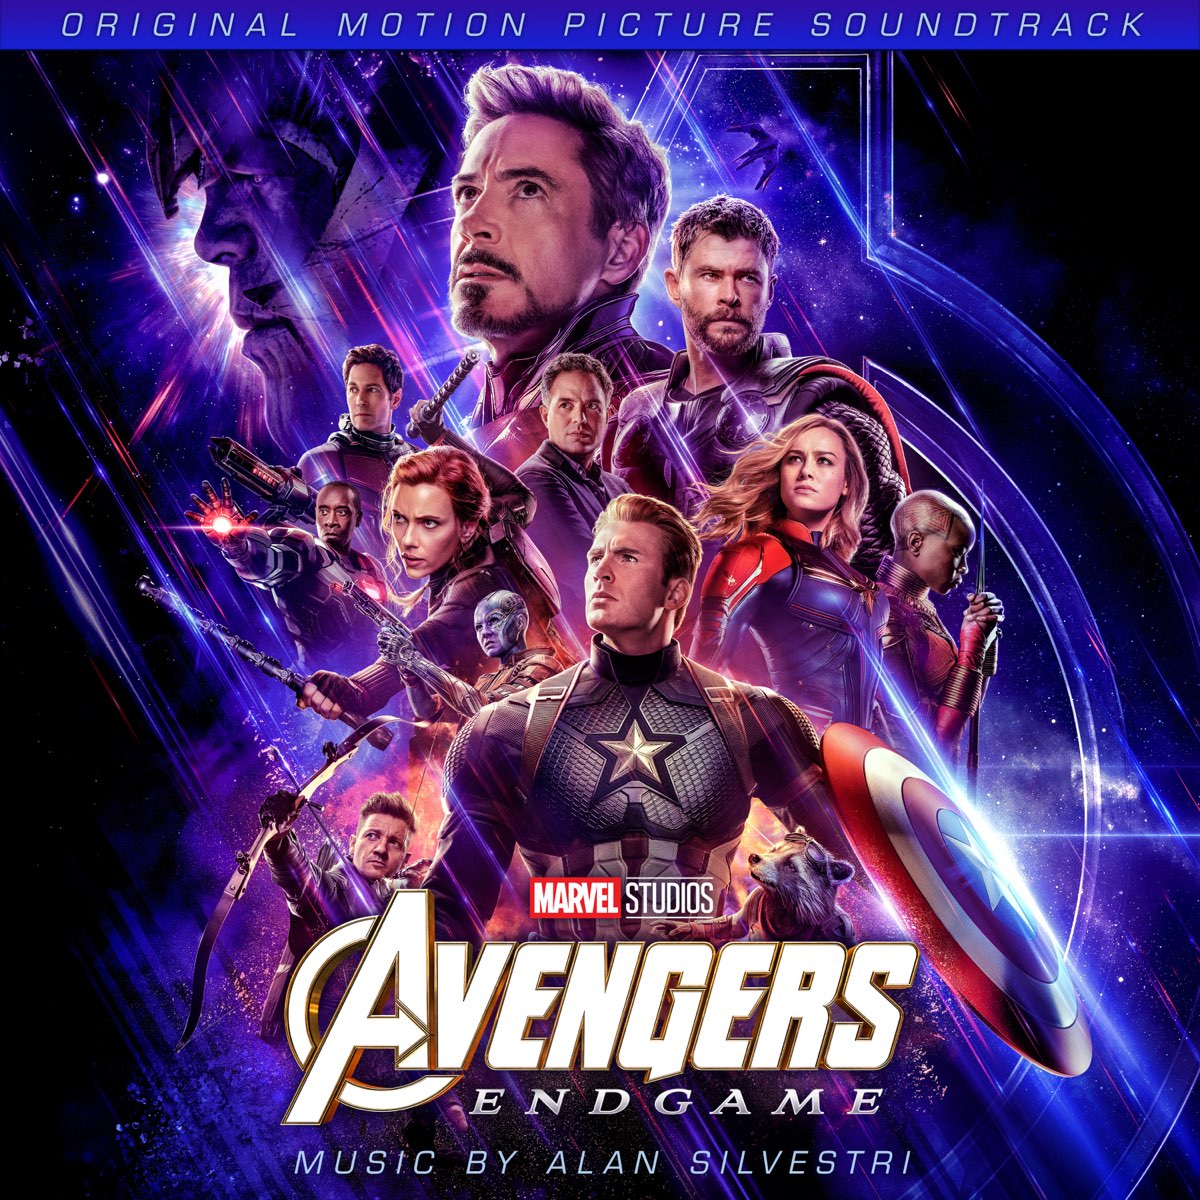 ‎Avengers: Endgame (Original Motion Picture Soundtrack) by Alan Silvestri  on Apple Music